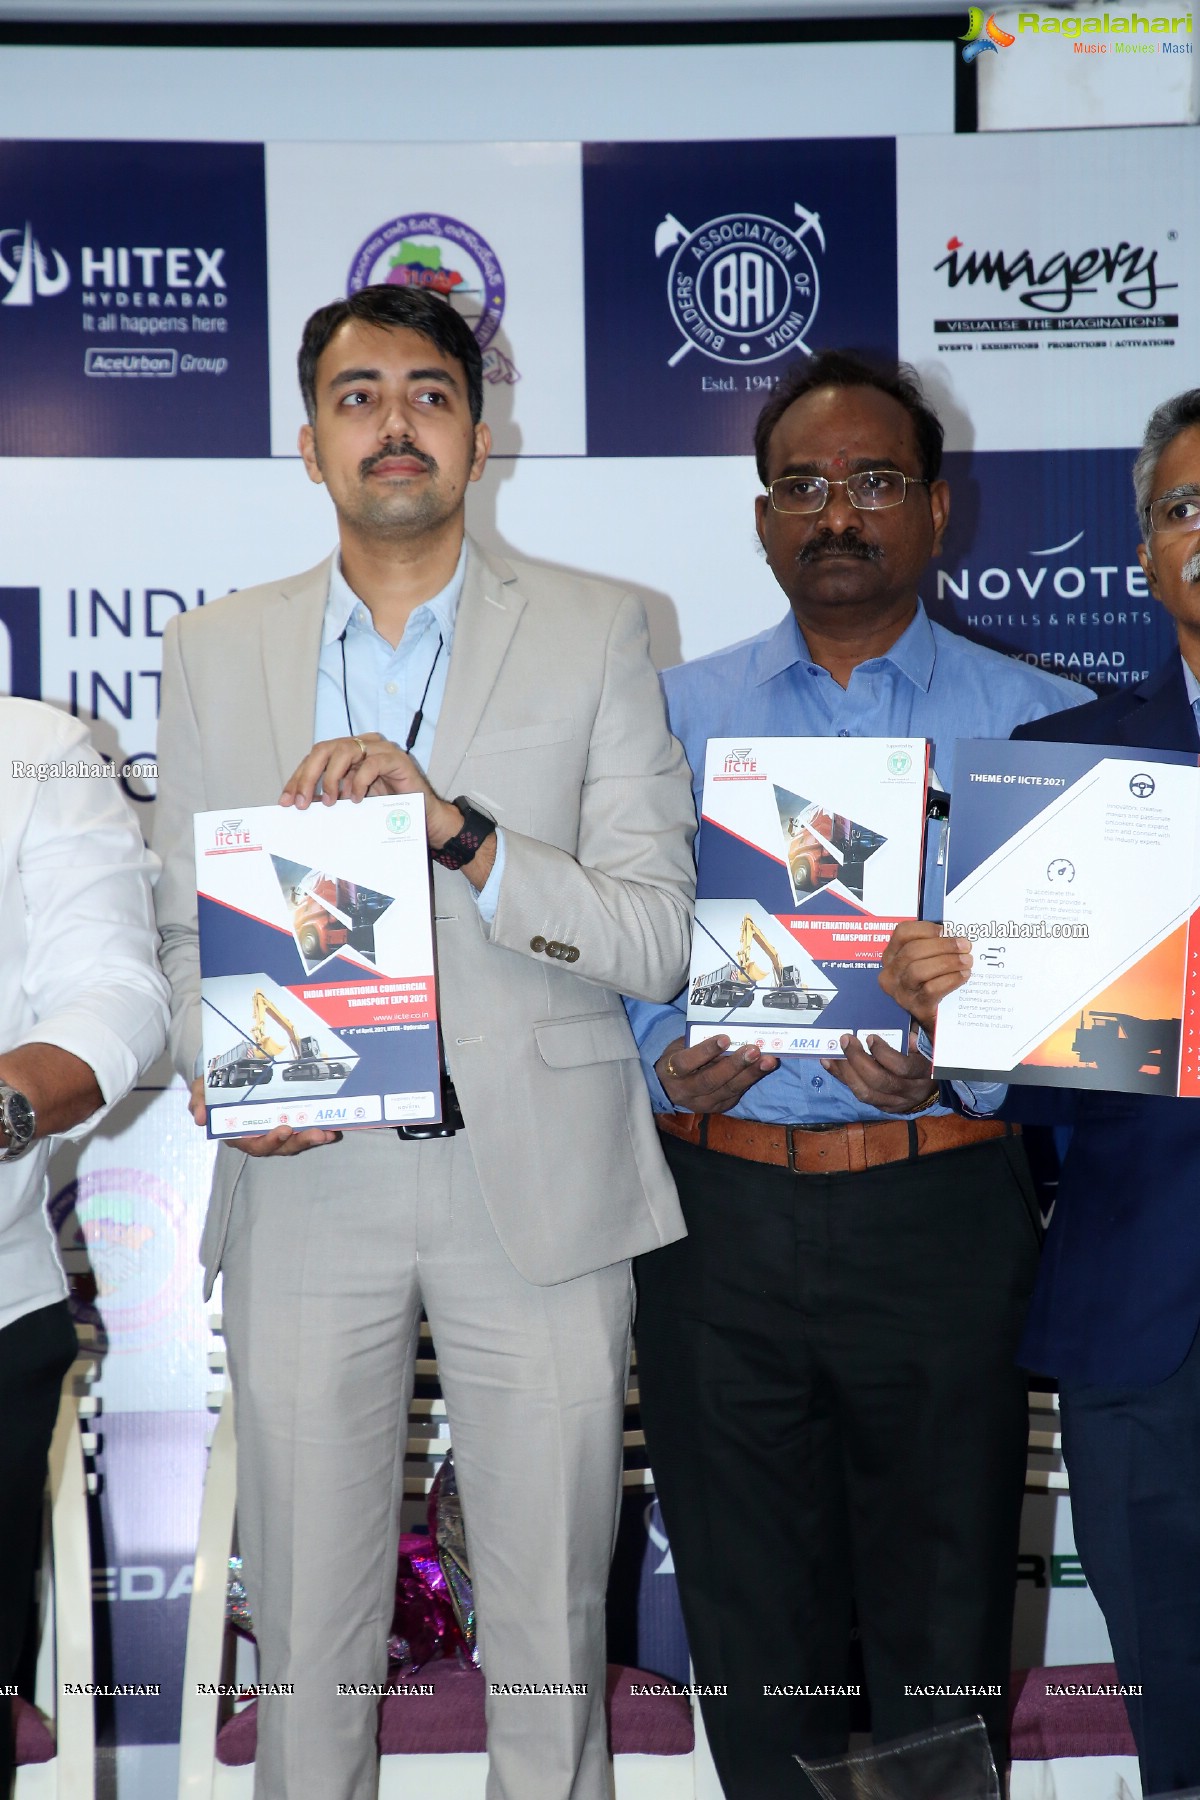 India International Commercial Transport Expo 2021 Press Meet